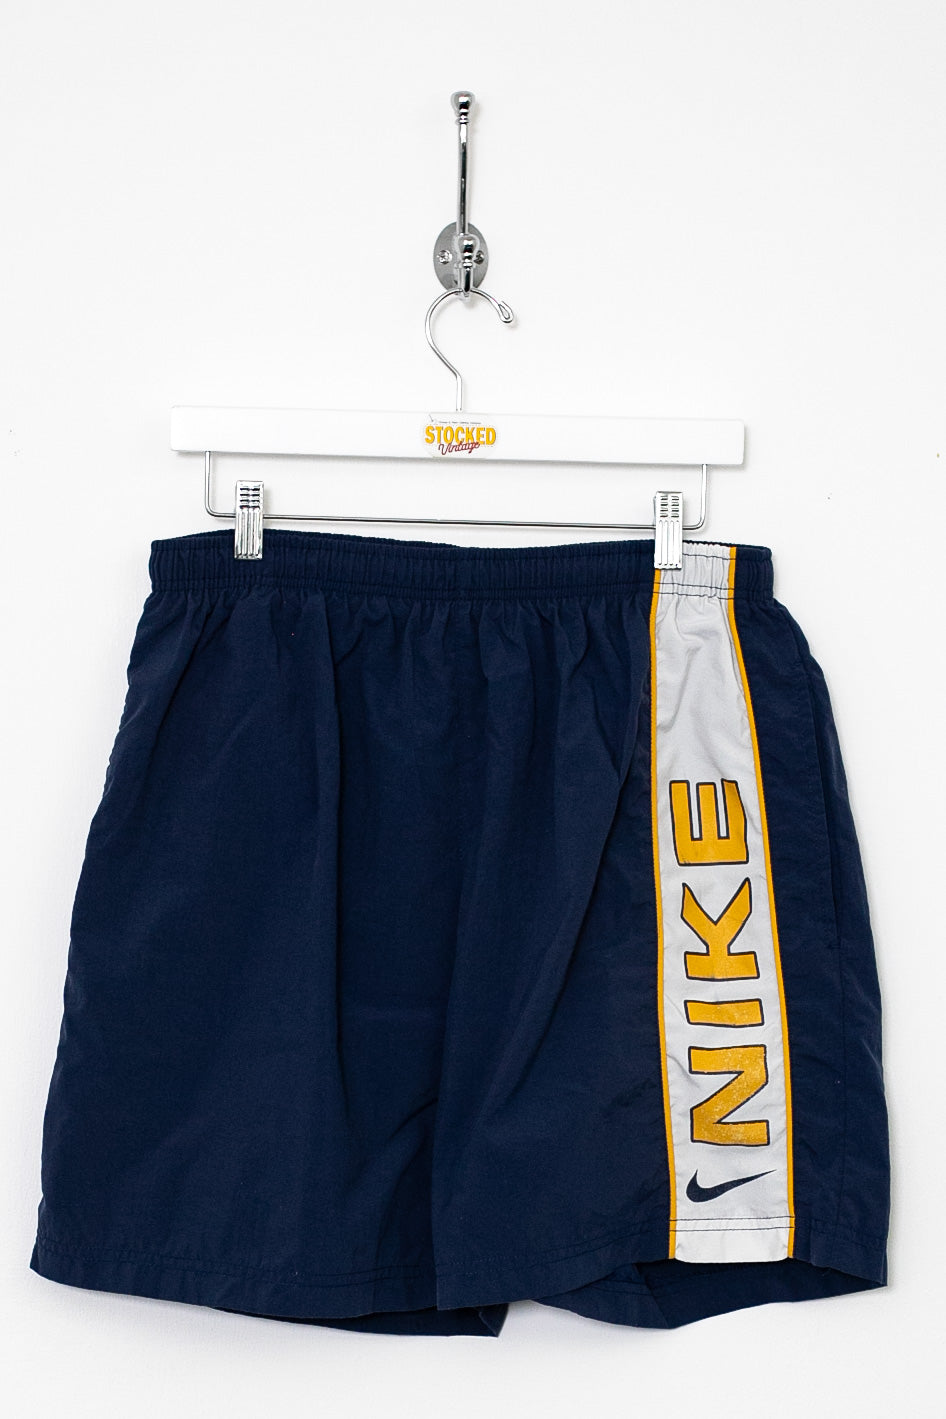 90s Nike Shorts (XL)